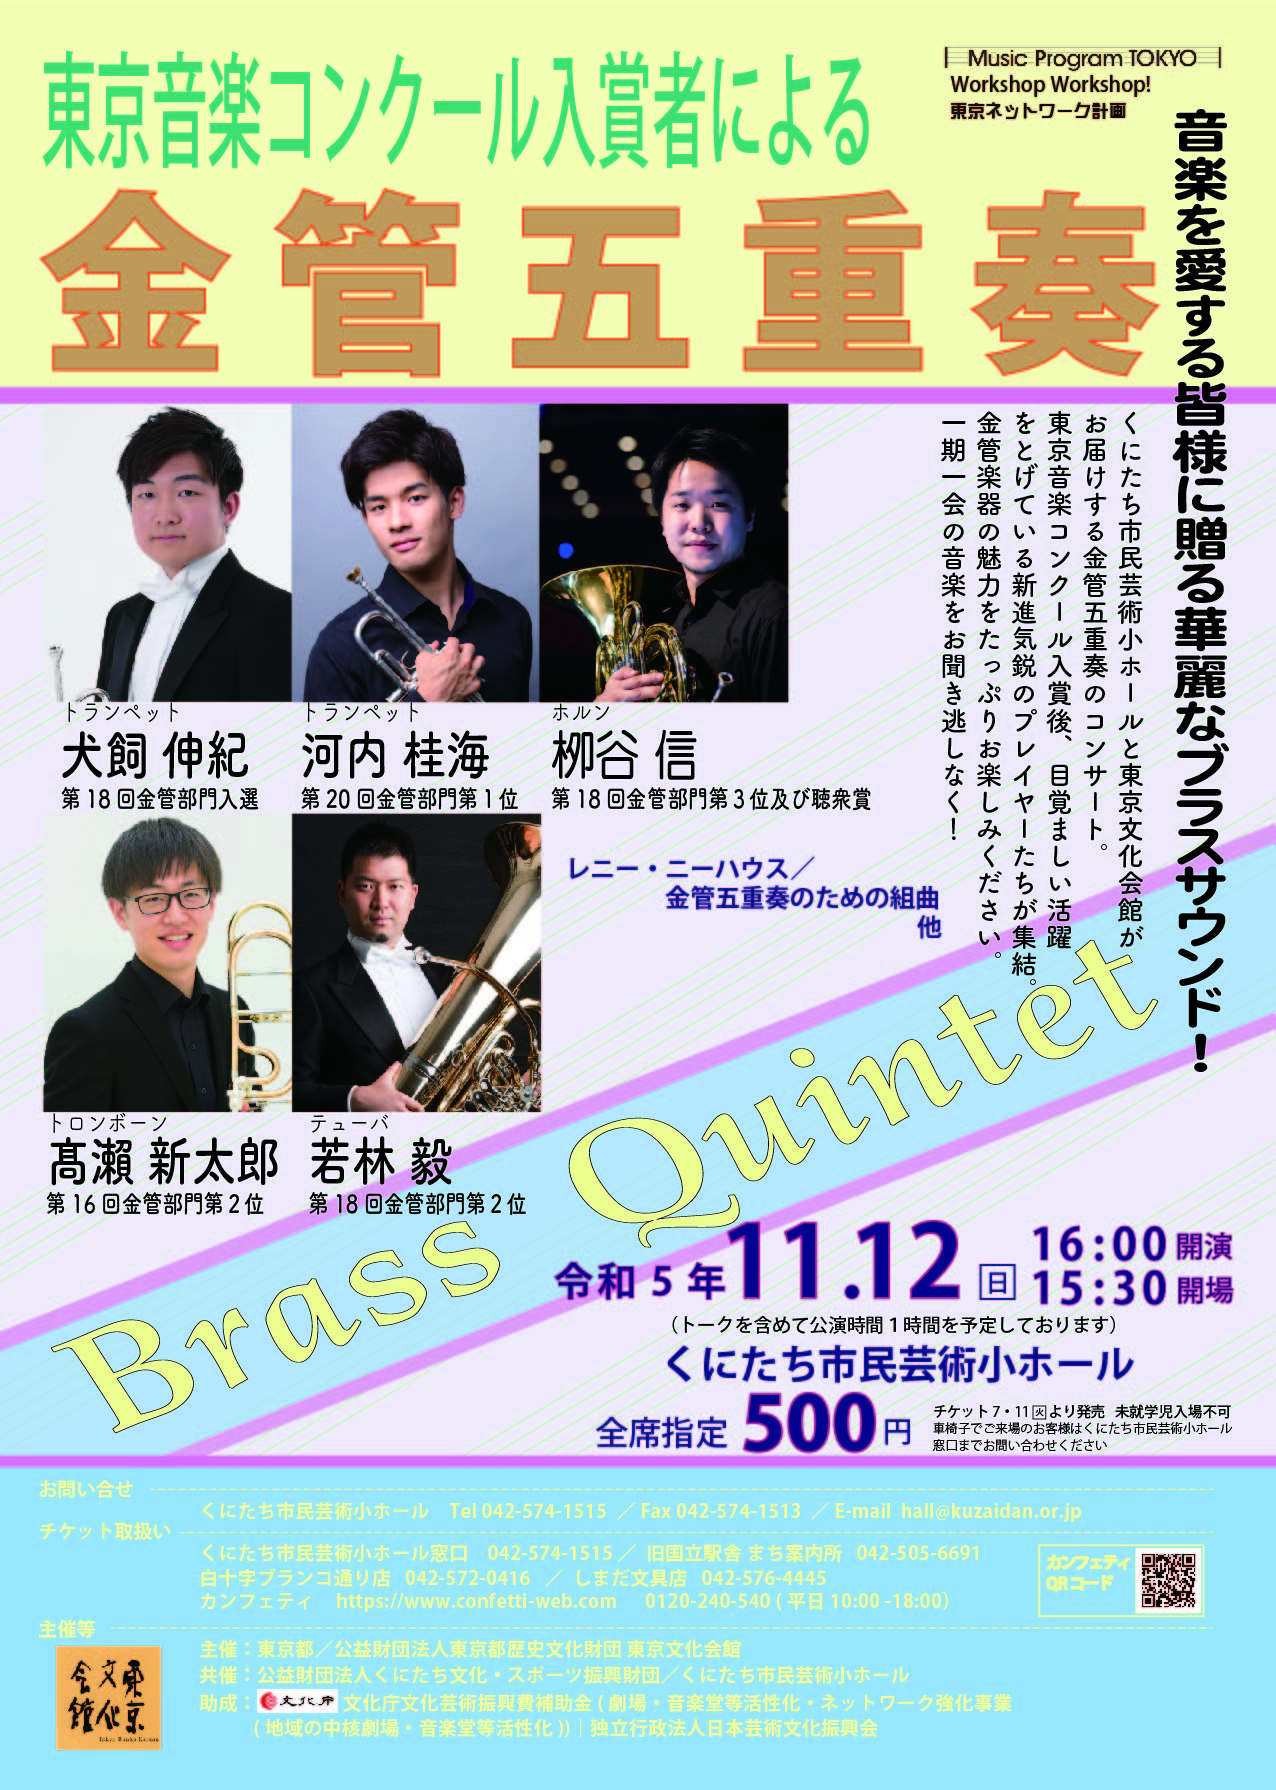 Music Program TOKYO　Workshop Workshop東京ネットワーク計画 東京音楽コンクール入賞者による金管五重奏